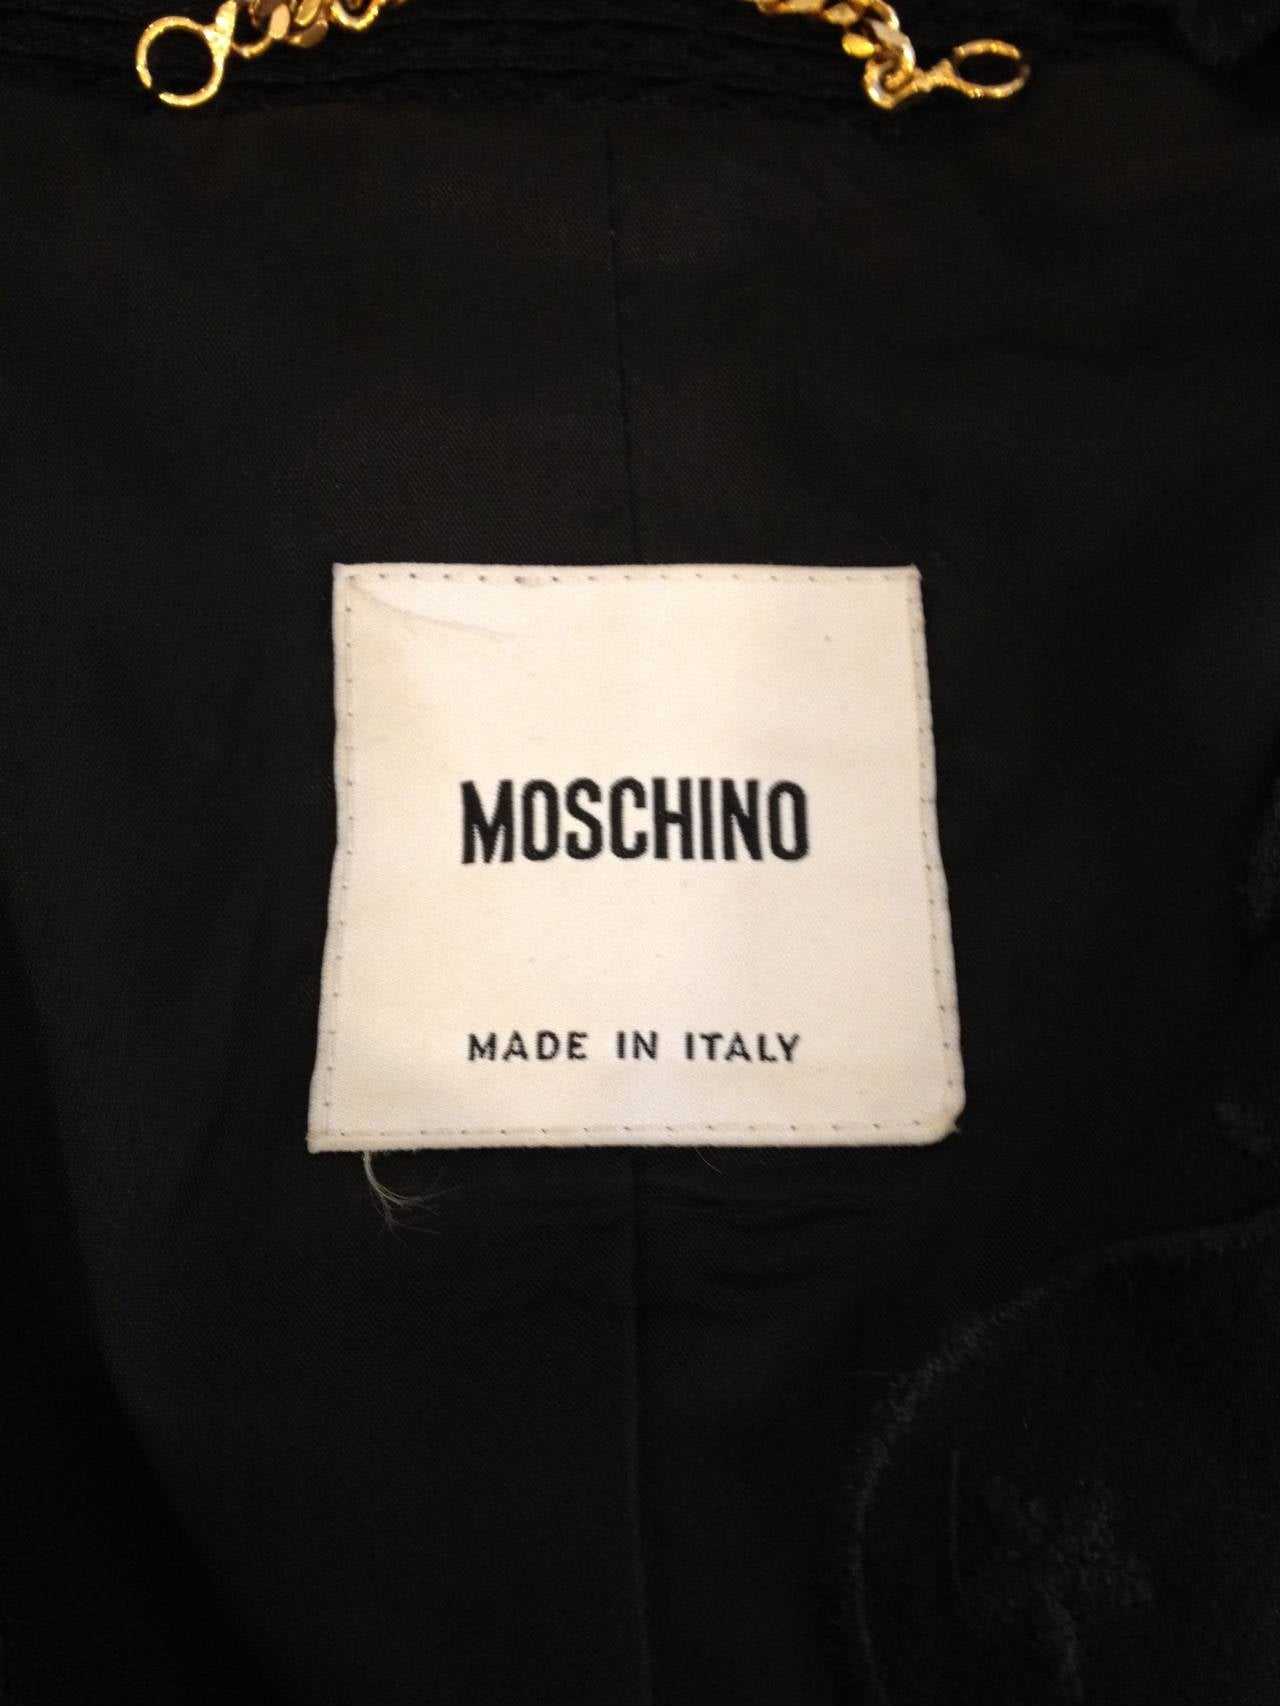 Moschino Black Tweed Jacket with Scalloped Chiffon Collar 2